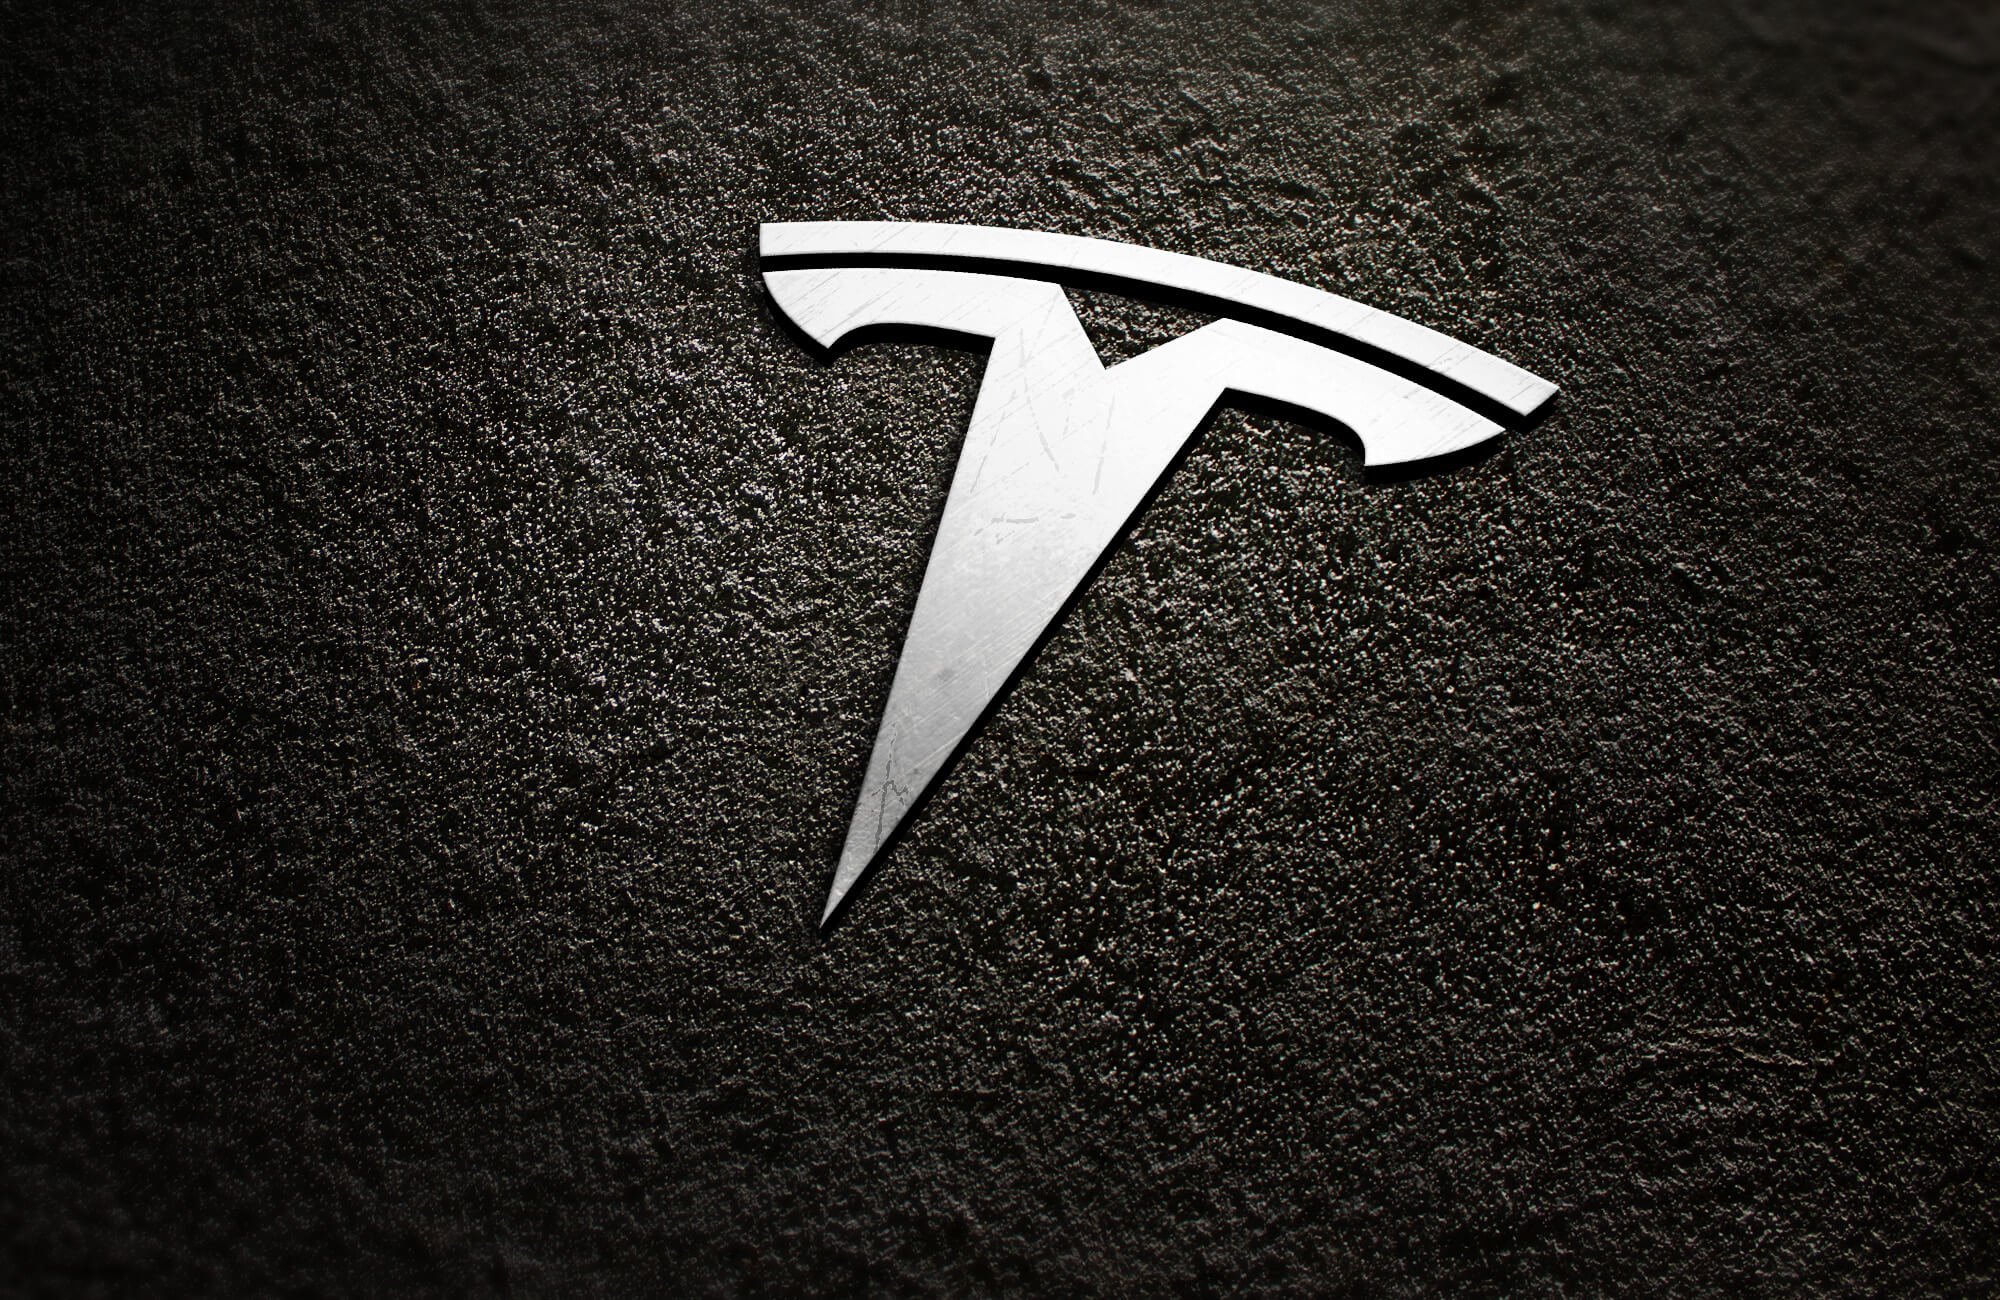 Tesla Motors, Logo Wallpaper